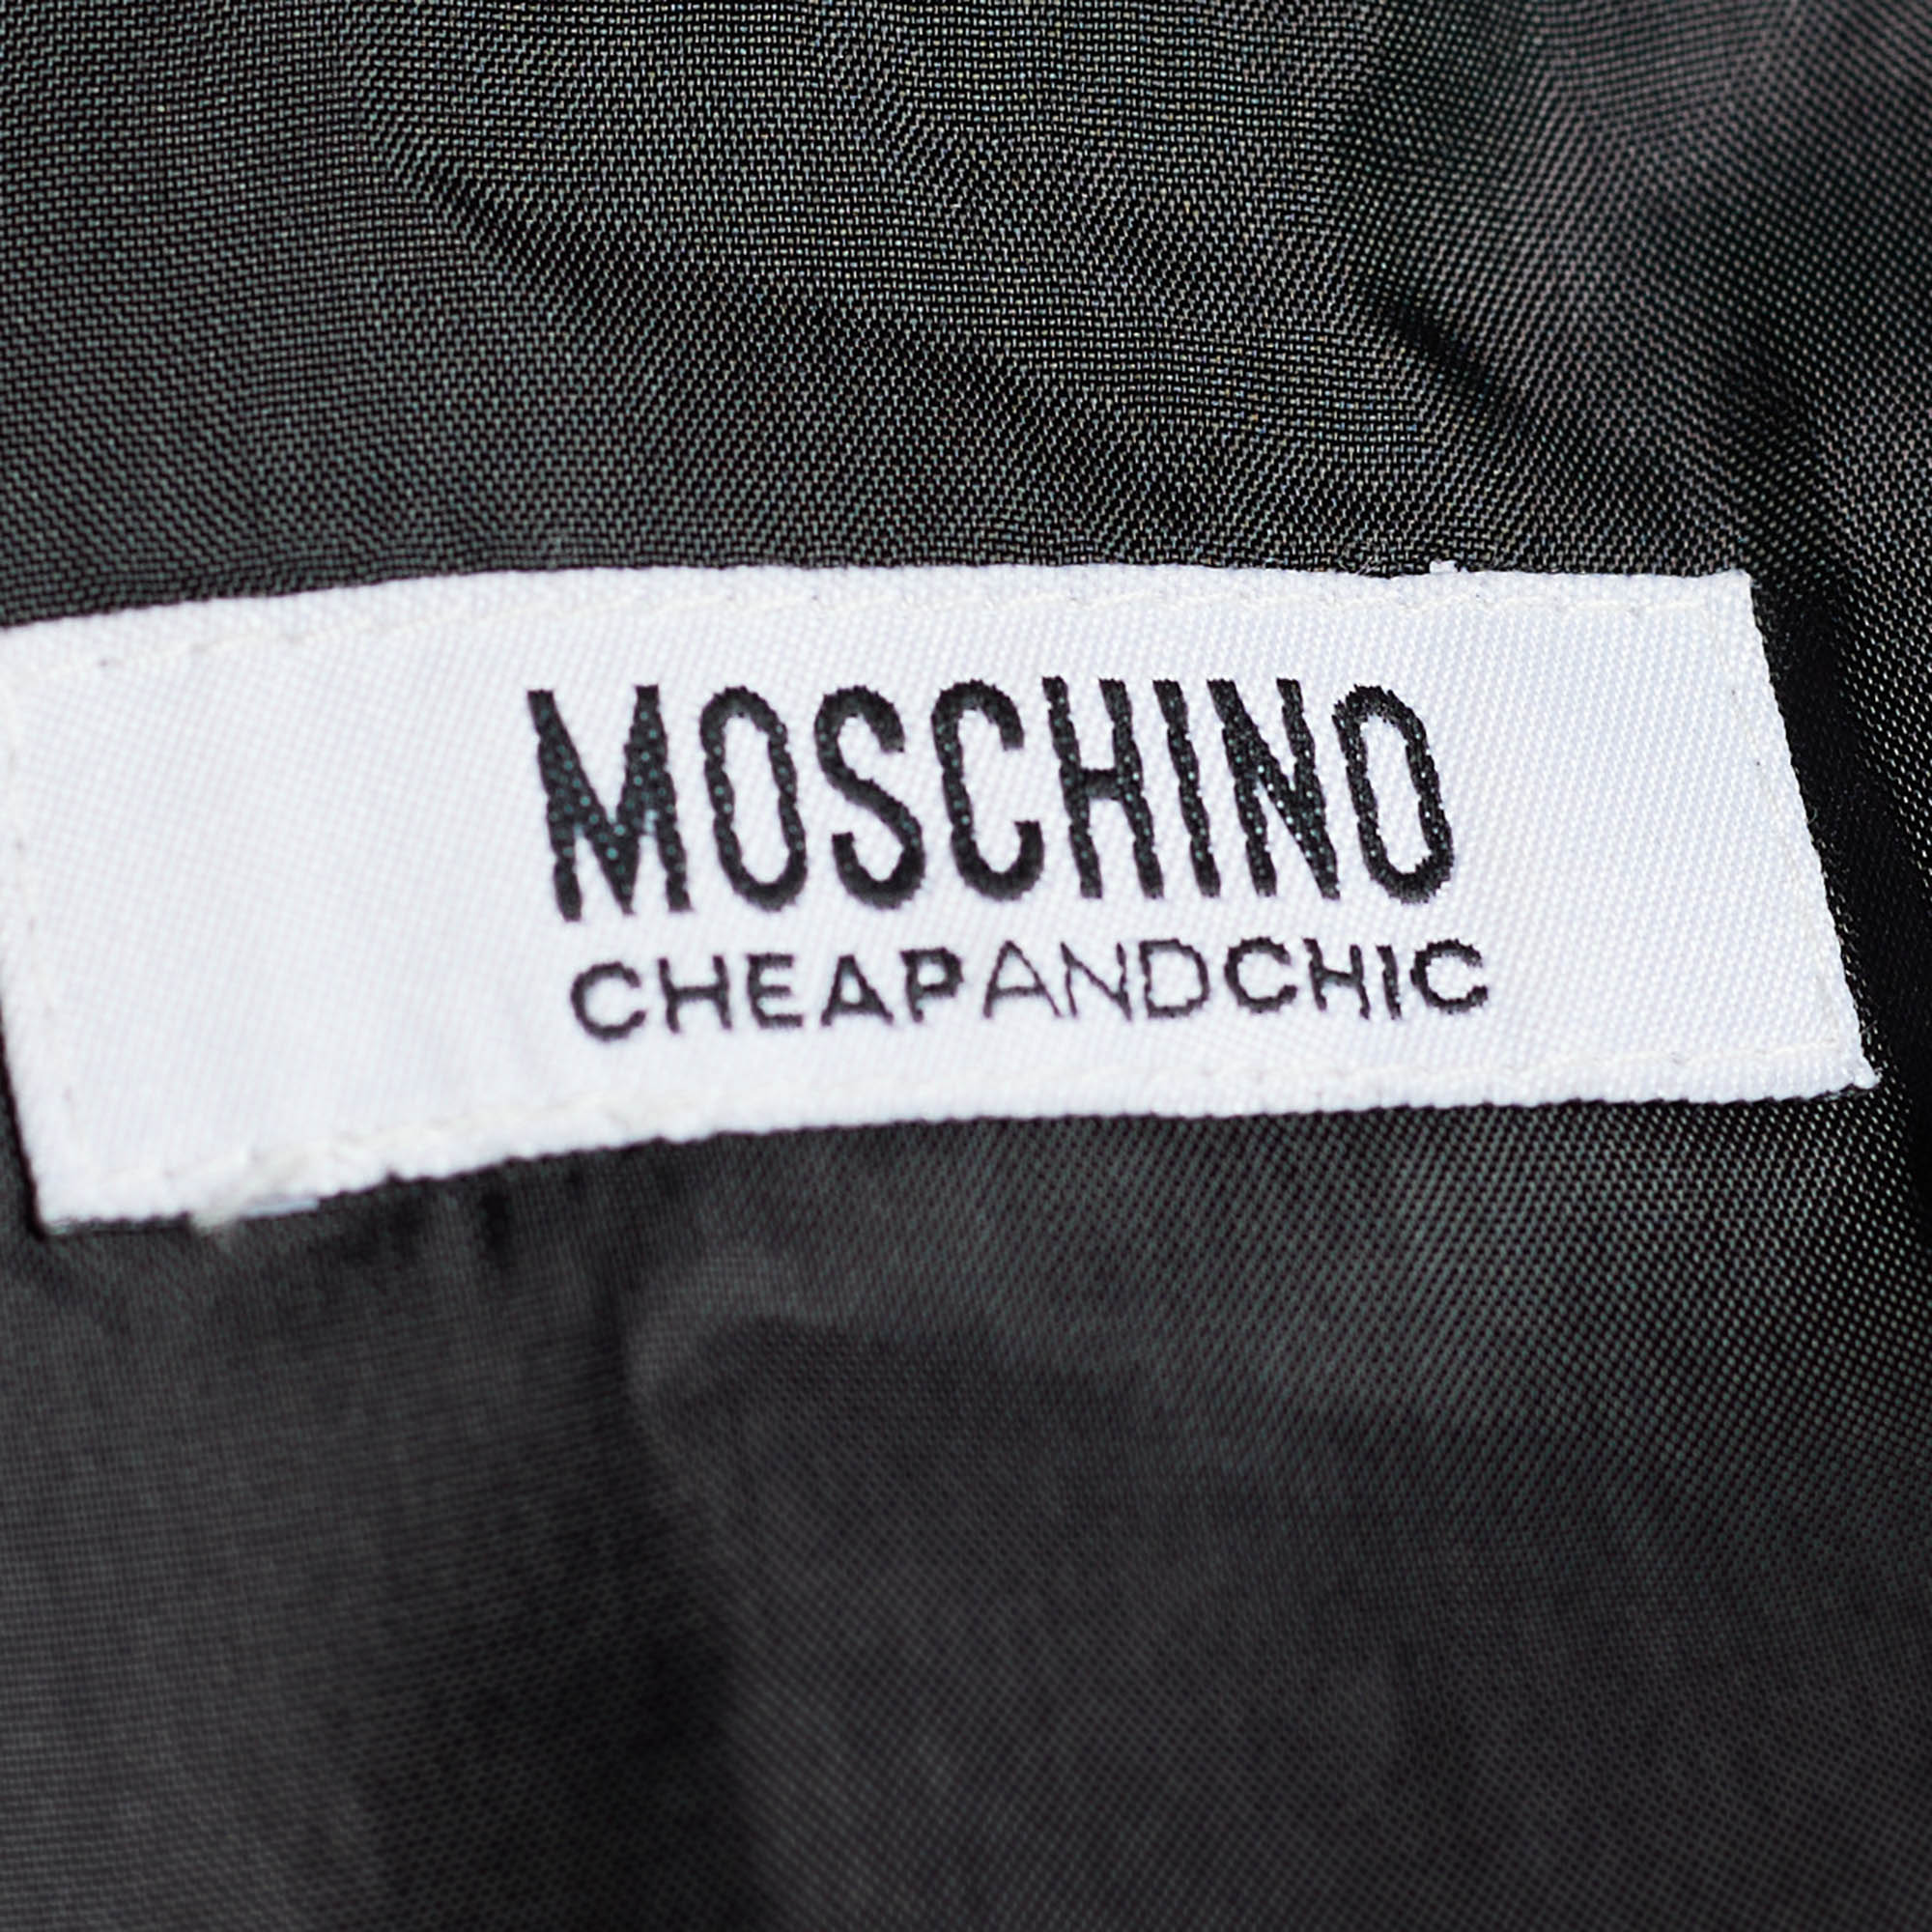 Moschino Cheap And Chic Burgundy Houndstooth Jacquard Sheath Dress M